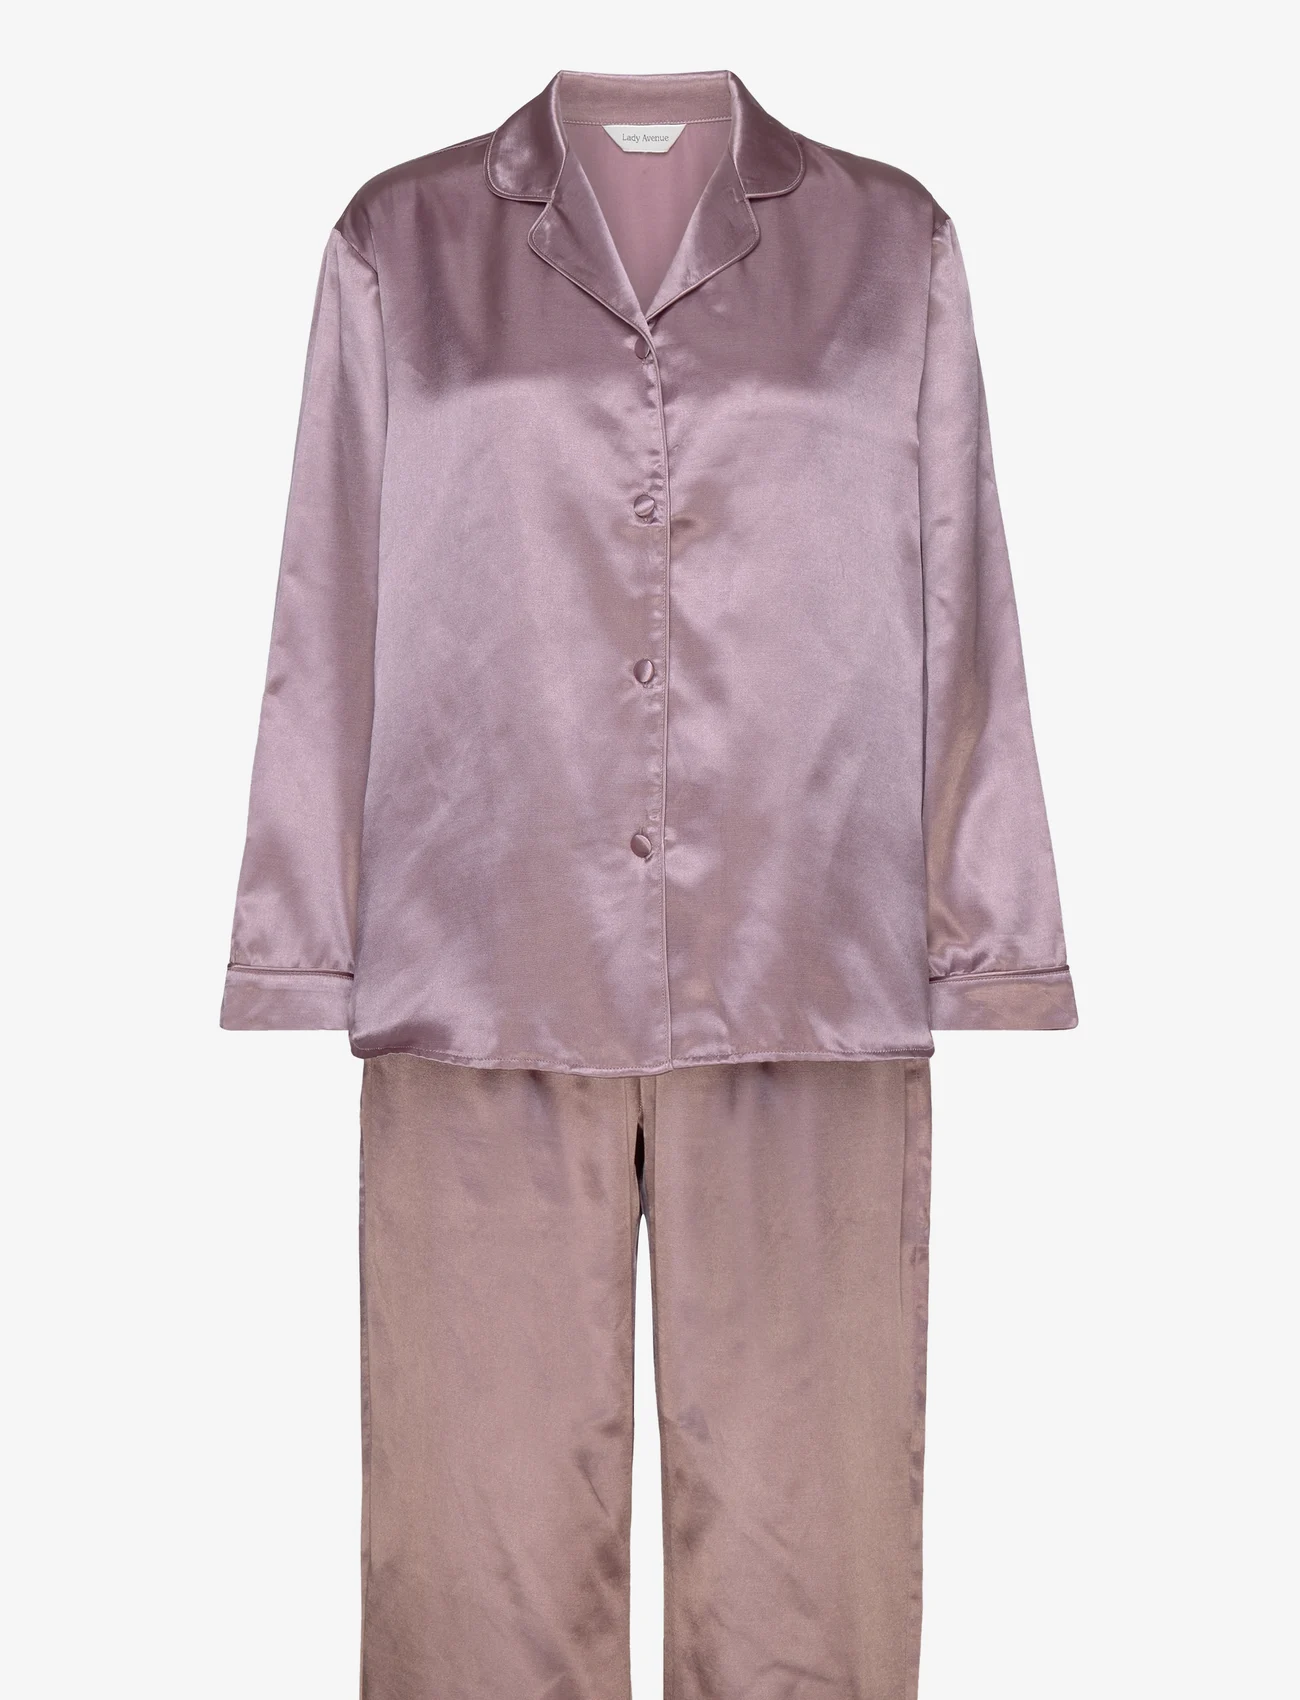 Lady Avenue - Satin Long Sleeve Pyjamas - plus size - winter rose - 0